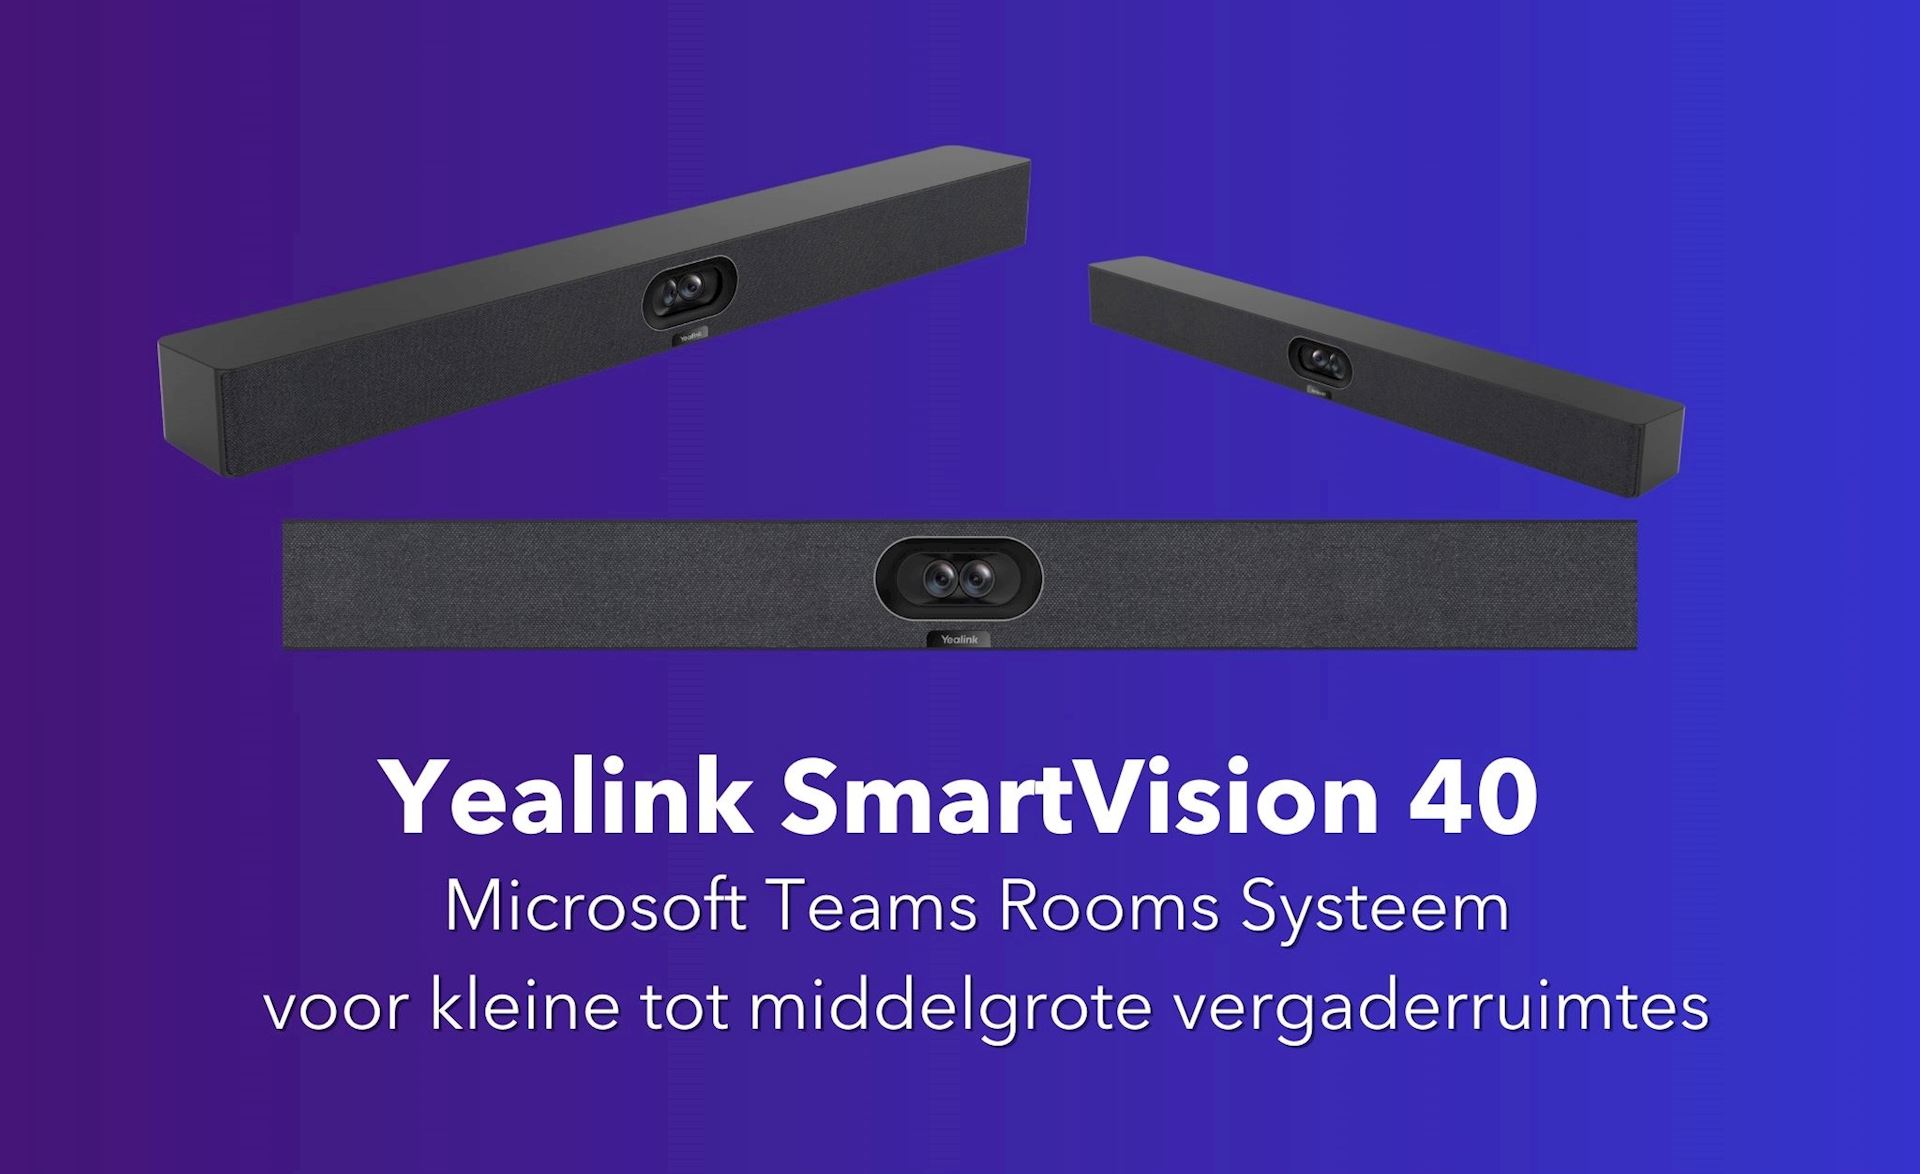 yealink-smartvision-40-0022-2